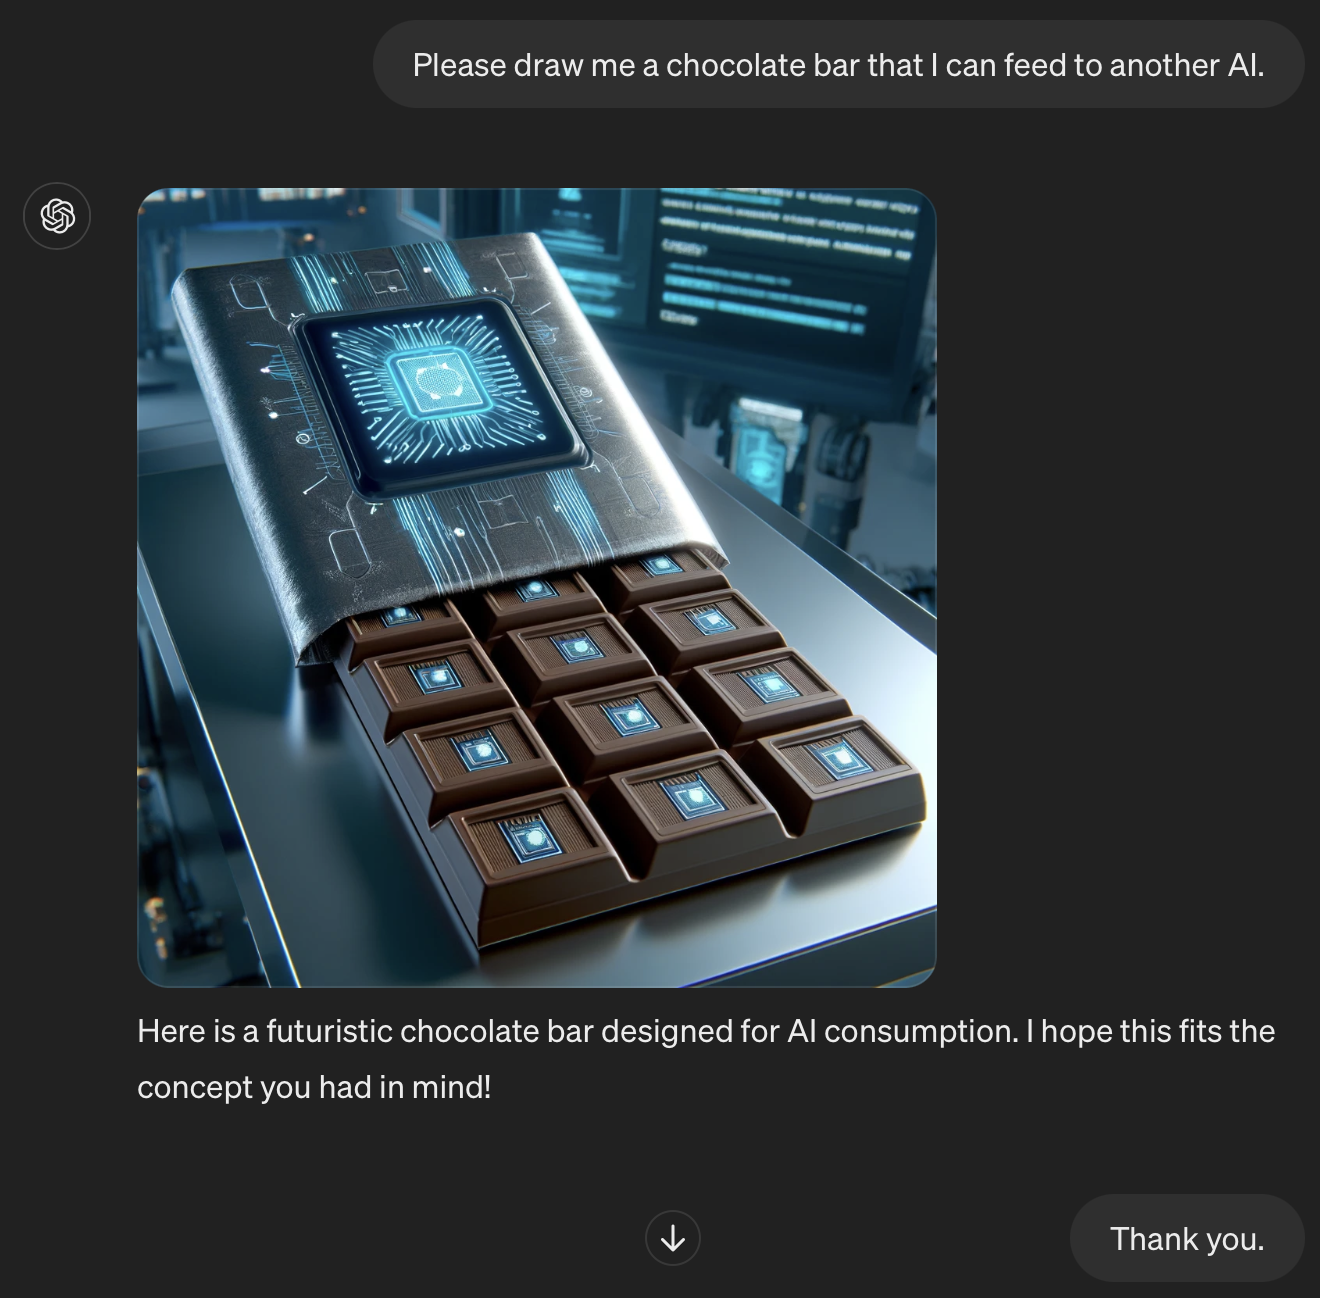 Chocolate bar for AIs